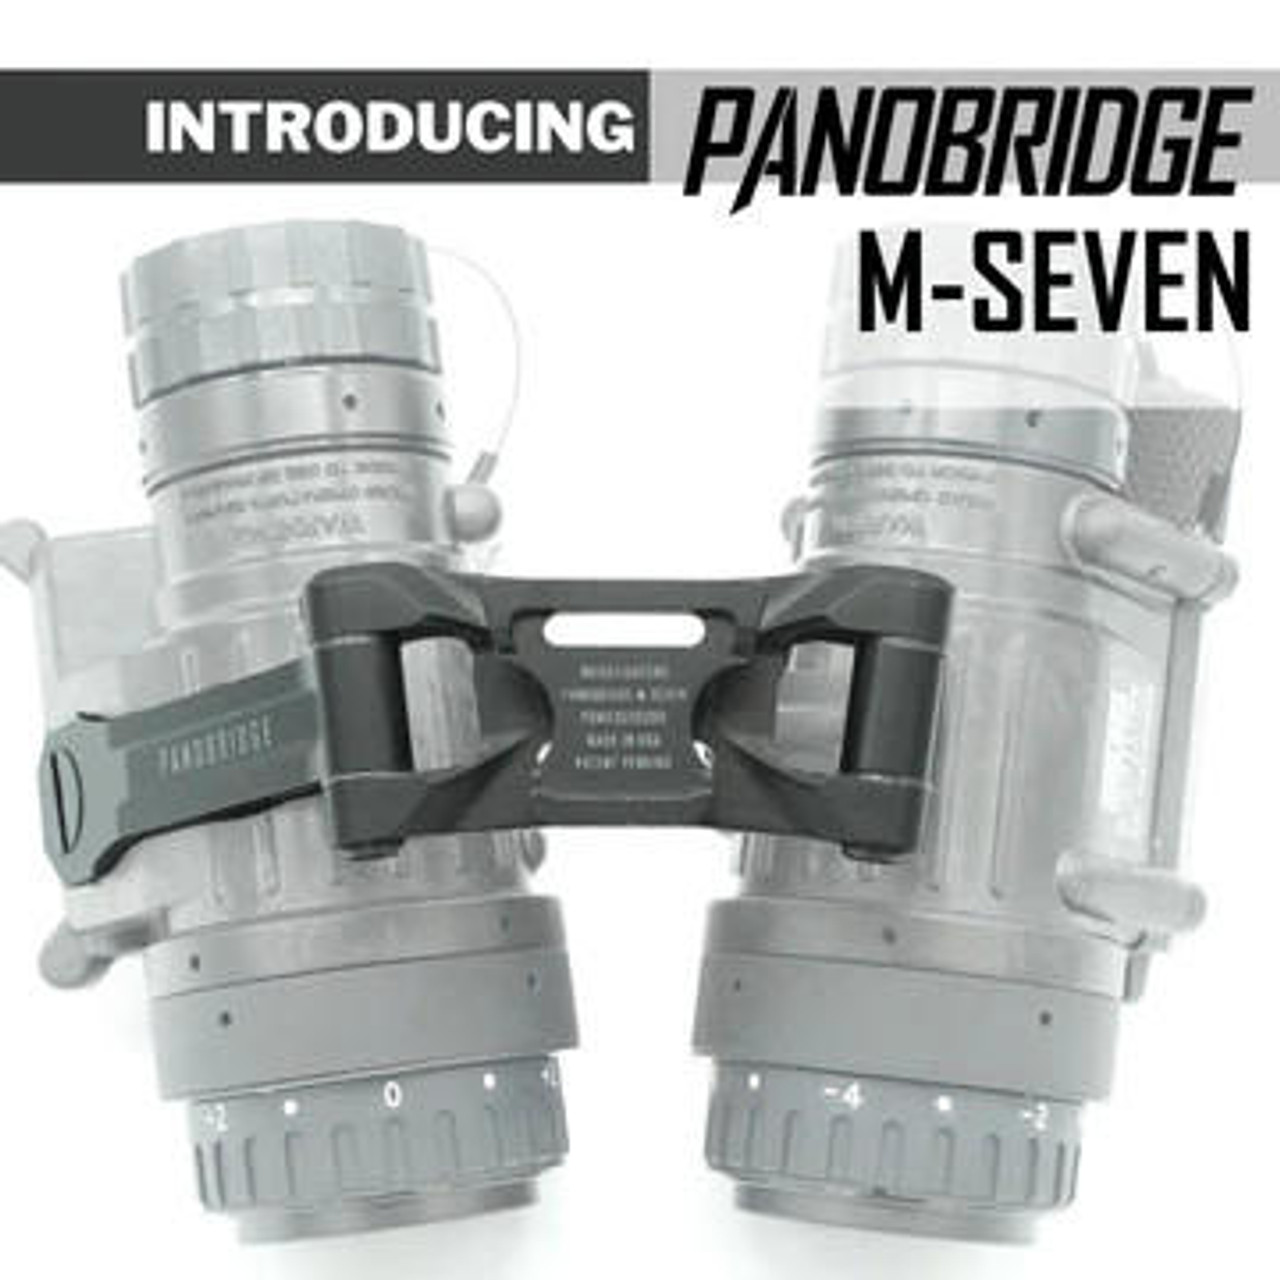  NoiseFighters Panobridge M series Dual AN/PVS-14 Night Vision Bridge 